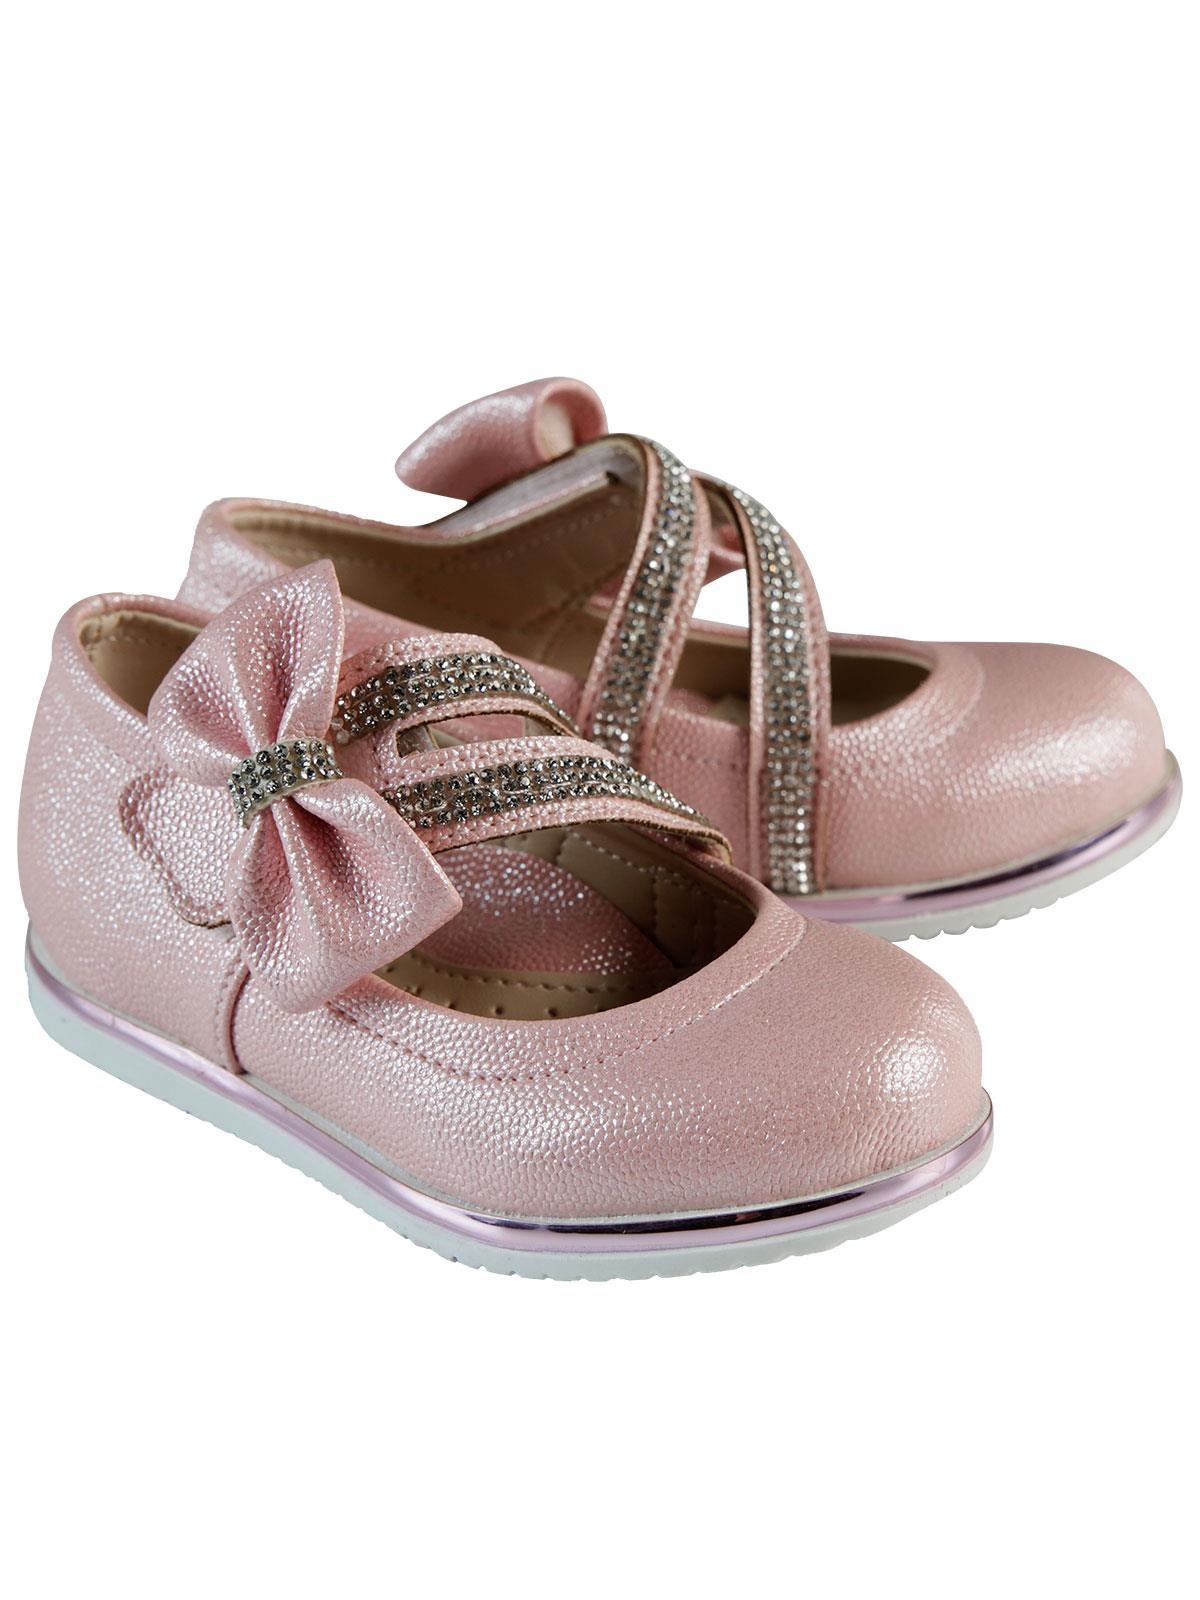 Missiva Kız Çocuk Babet Ayakkabı 21-25 Numara Pudra Pembe